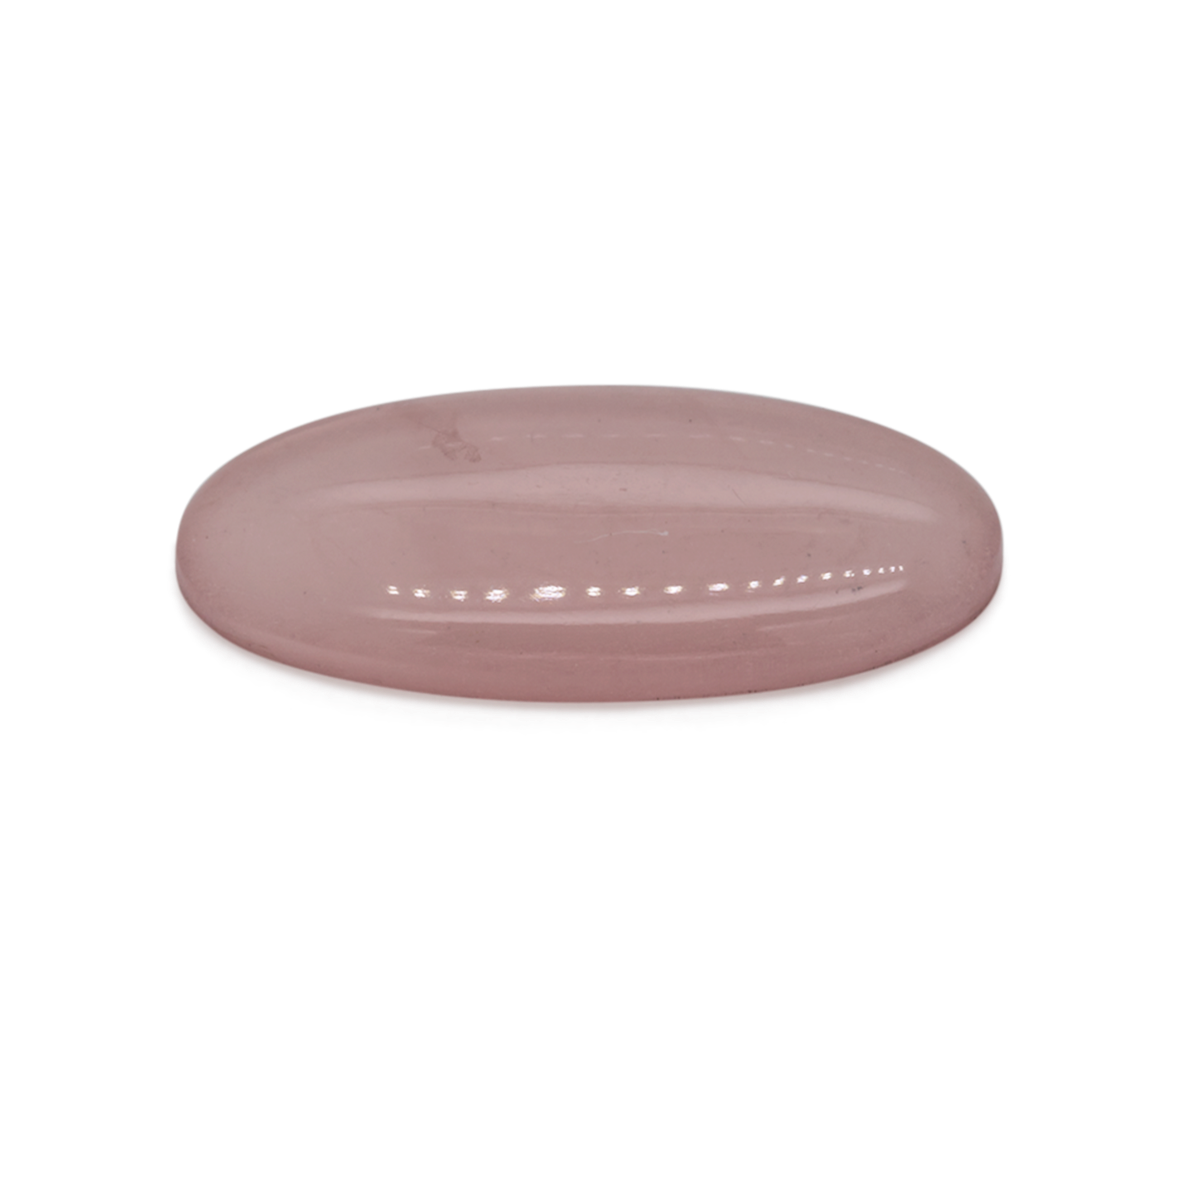 Rose quarz - pink, oval 19.6x9.6 mm, 5.10 cts, No. RO00006